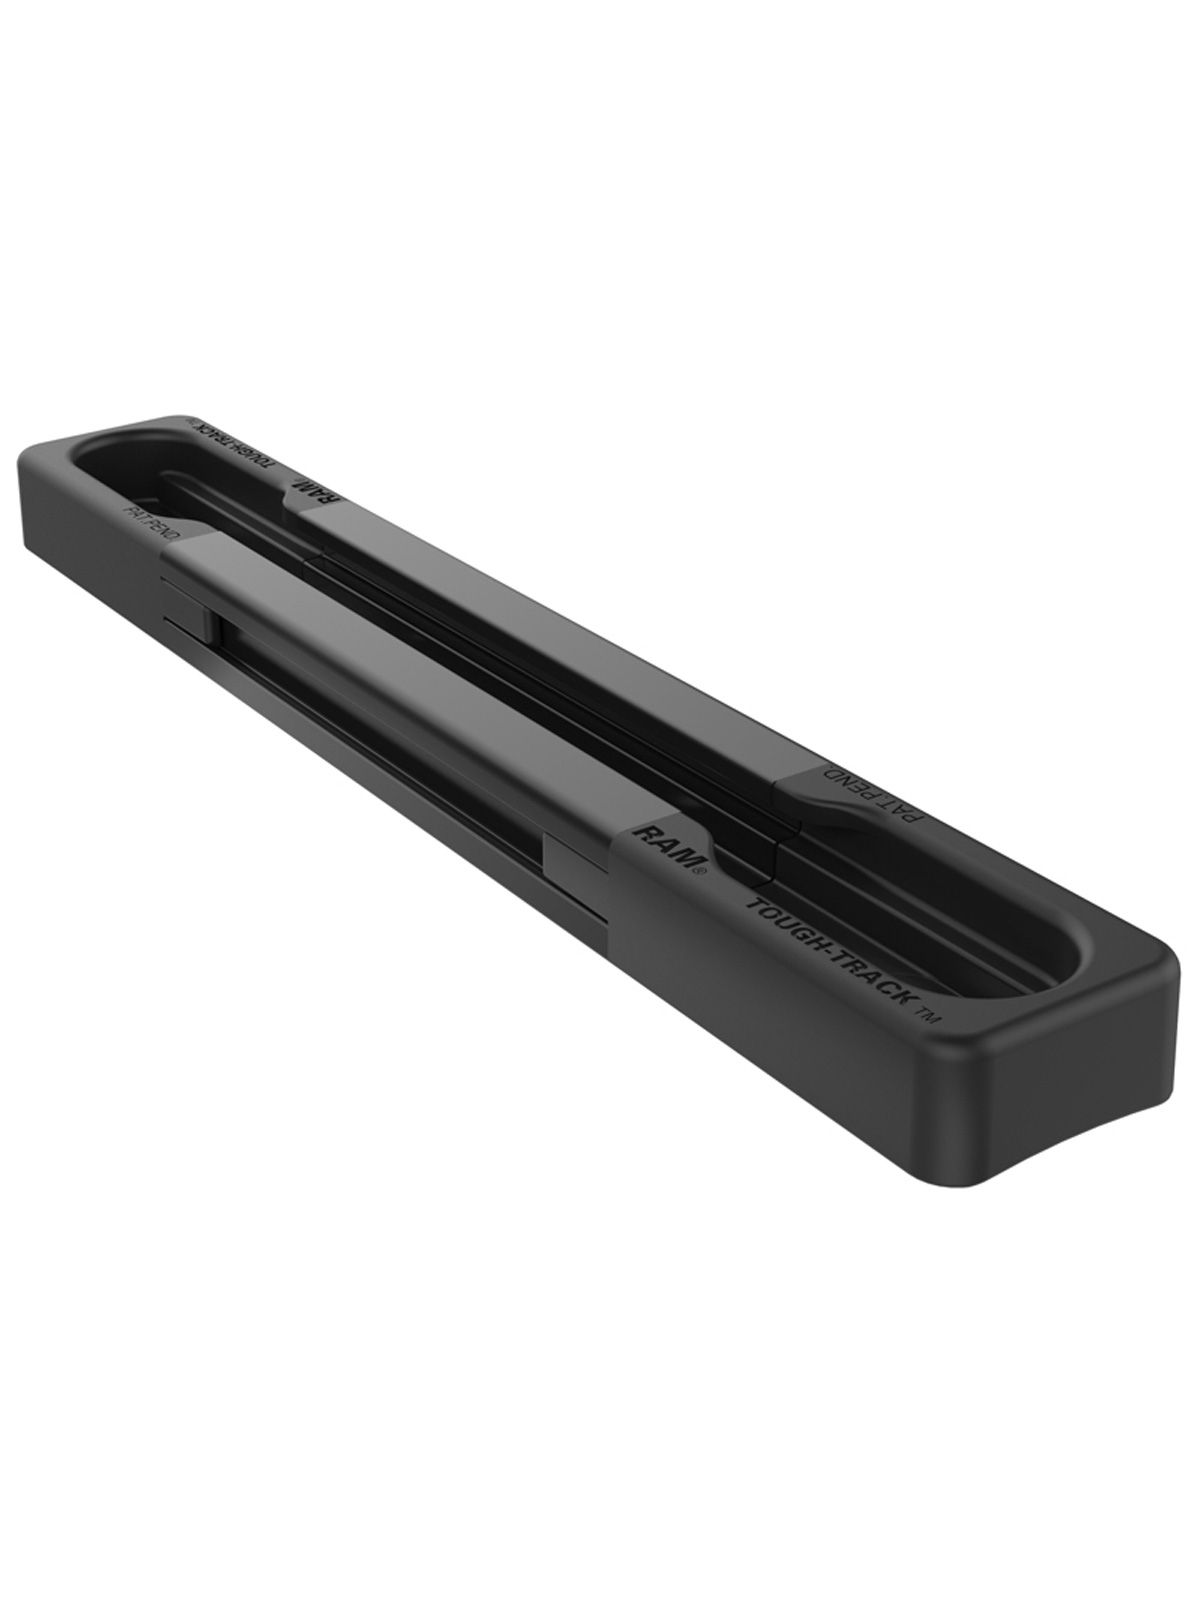 RAM Mounts Aluminium Tough-Track Schiene inkl. Endkappen - schwarz, Innenlänge 76,2 mm (3 Zoll)